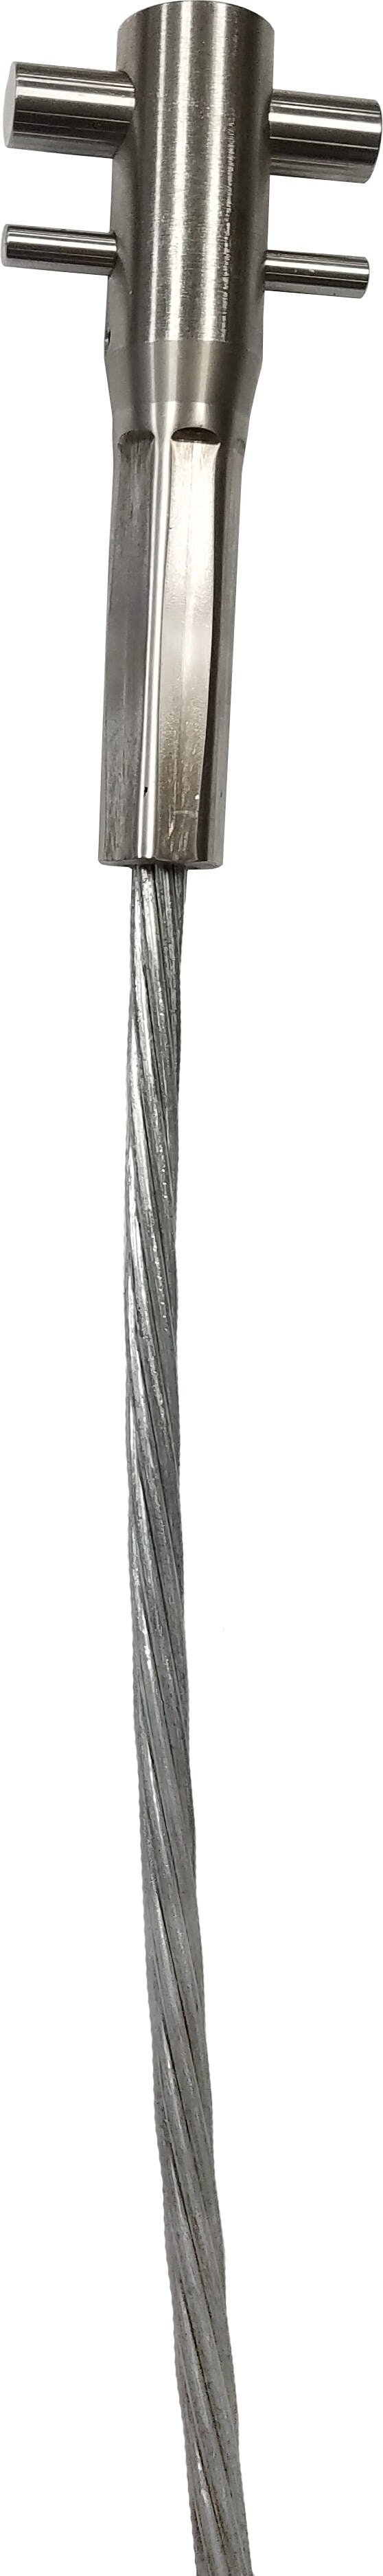 3M™ DBI-SALA® Lad-Saf™ Swaged Cable 6115024, 3/8 Inch, Galvanized Steel, 80 m